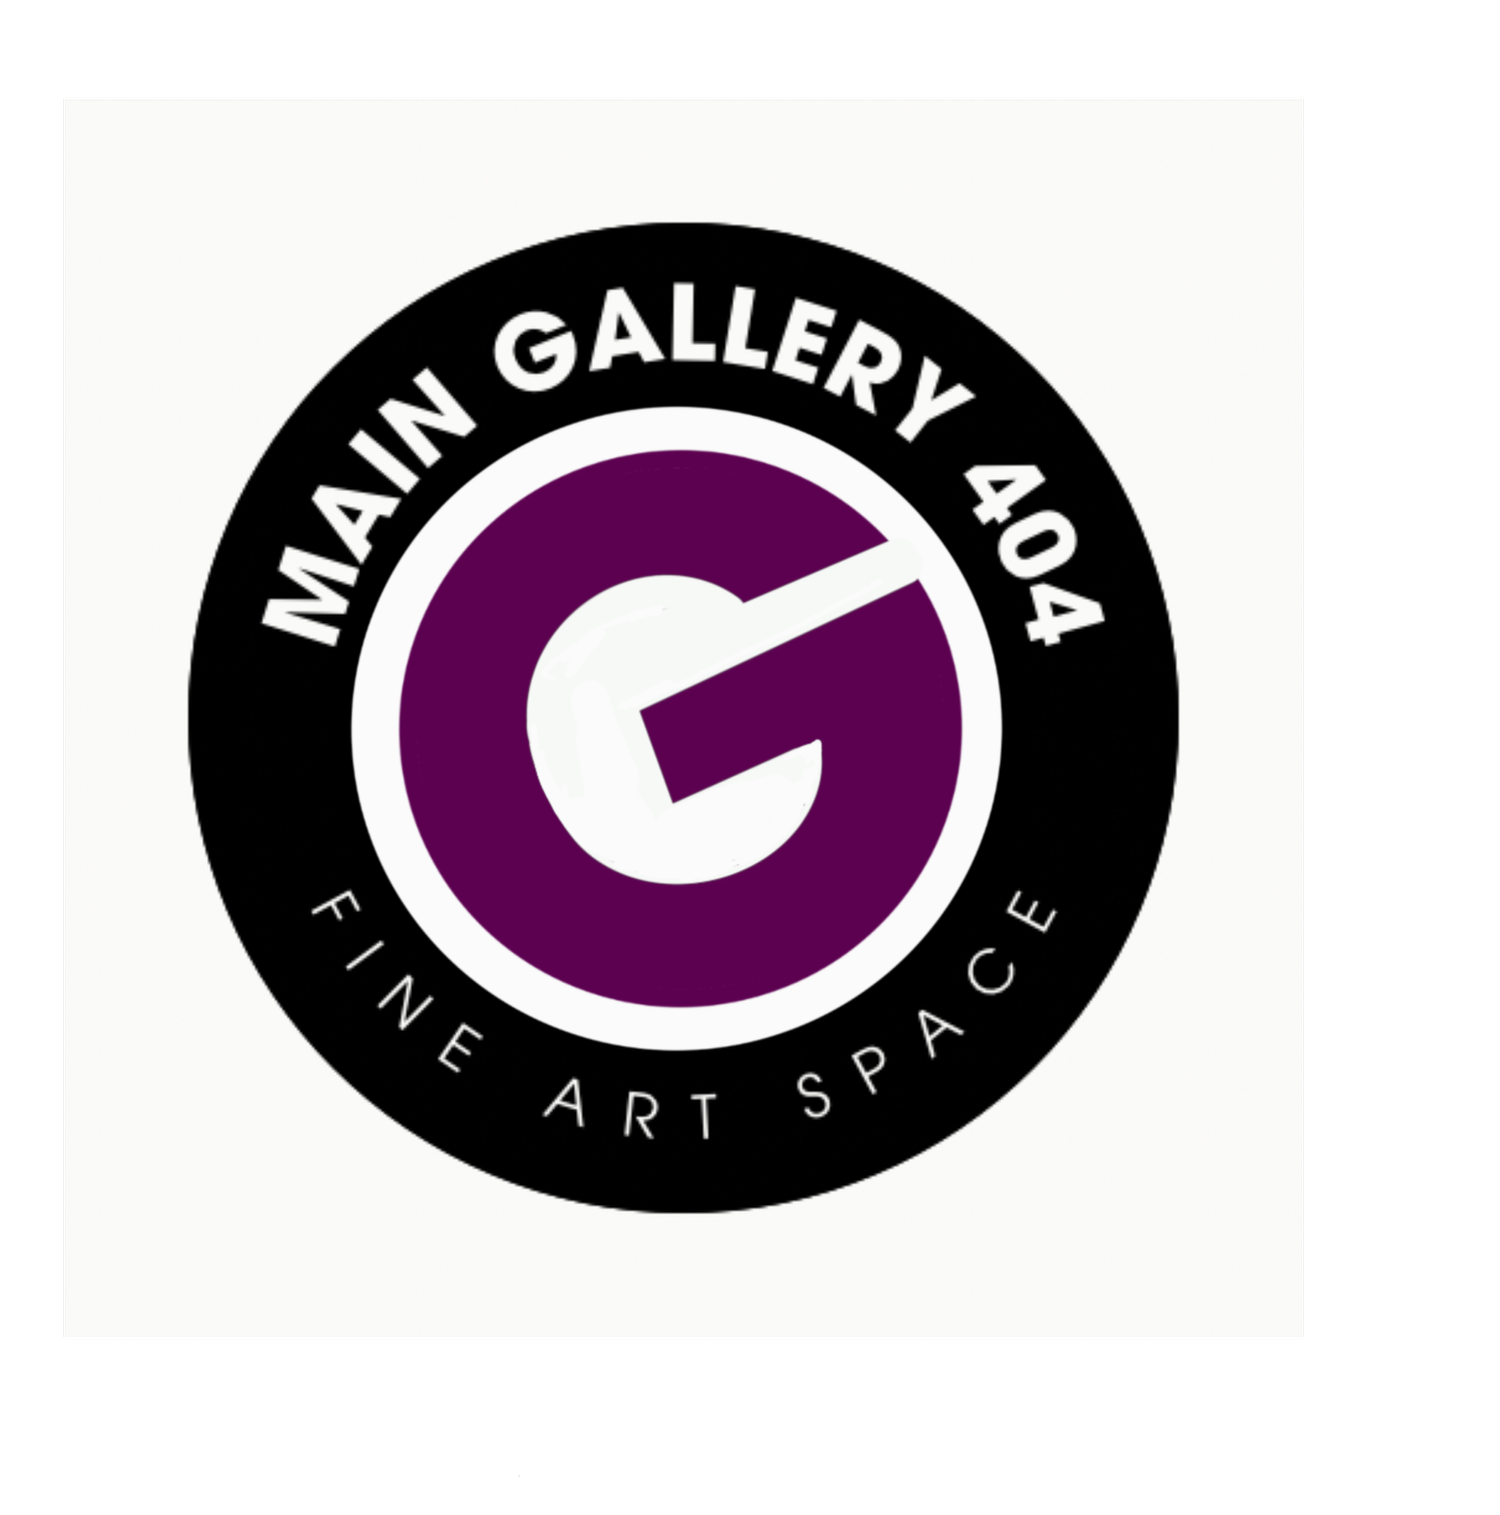 Main Gallery 404